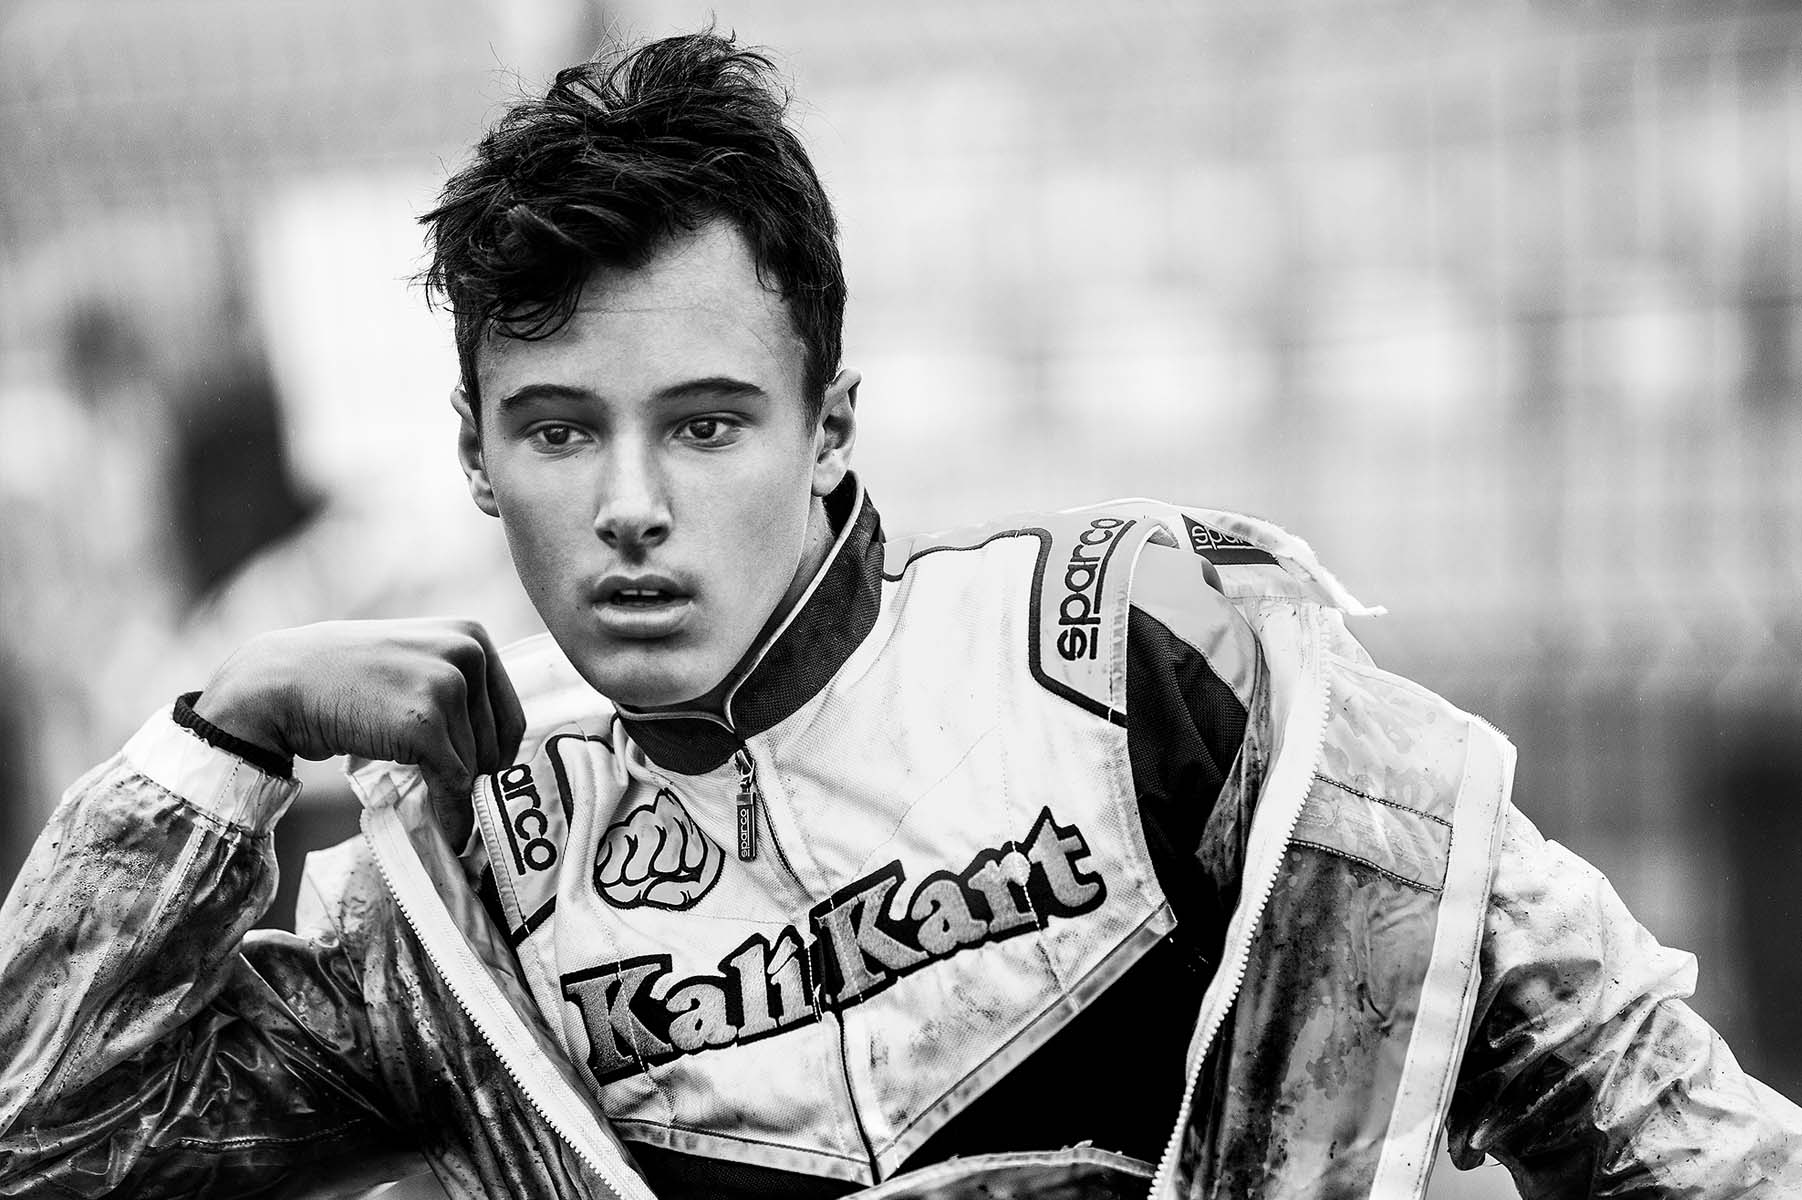 Motorsportfotografie mit Formel 3 Pilot und Kartweltmeister Emilien Denner 